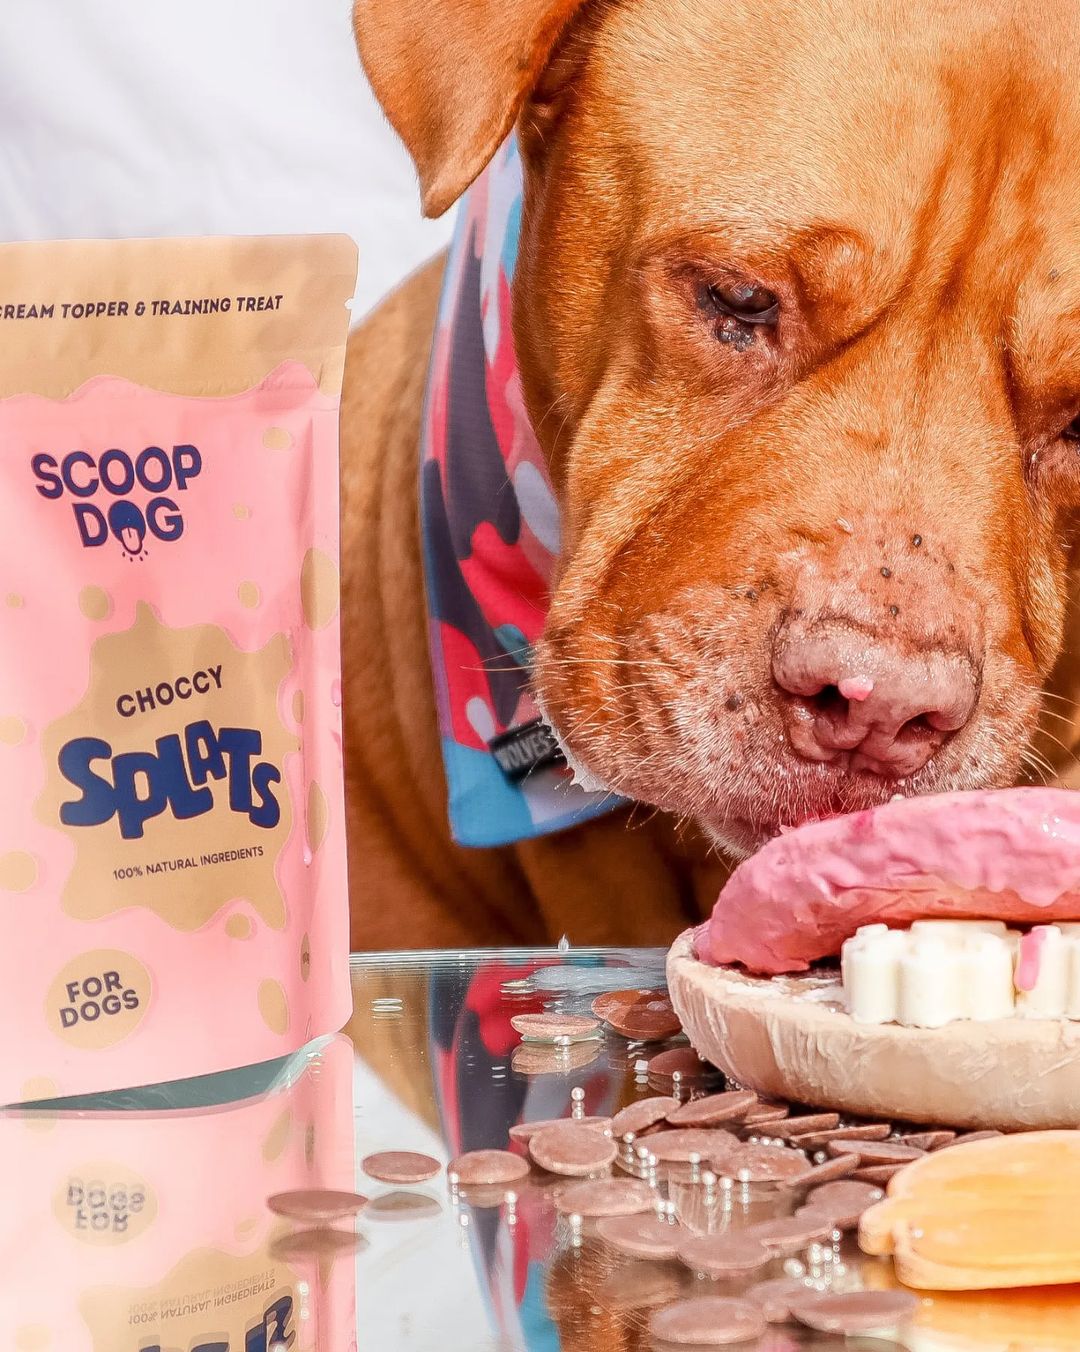 Choccy Splats - Scoop Dog  